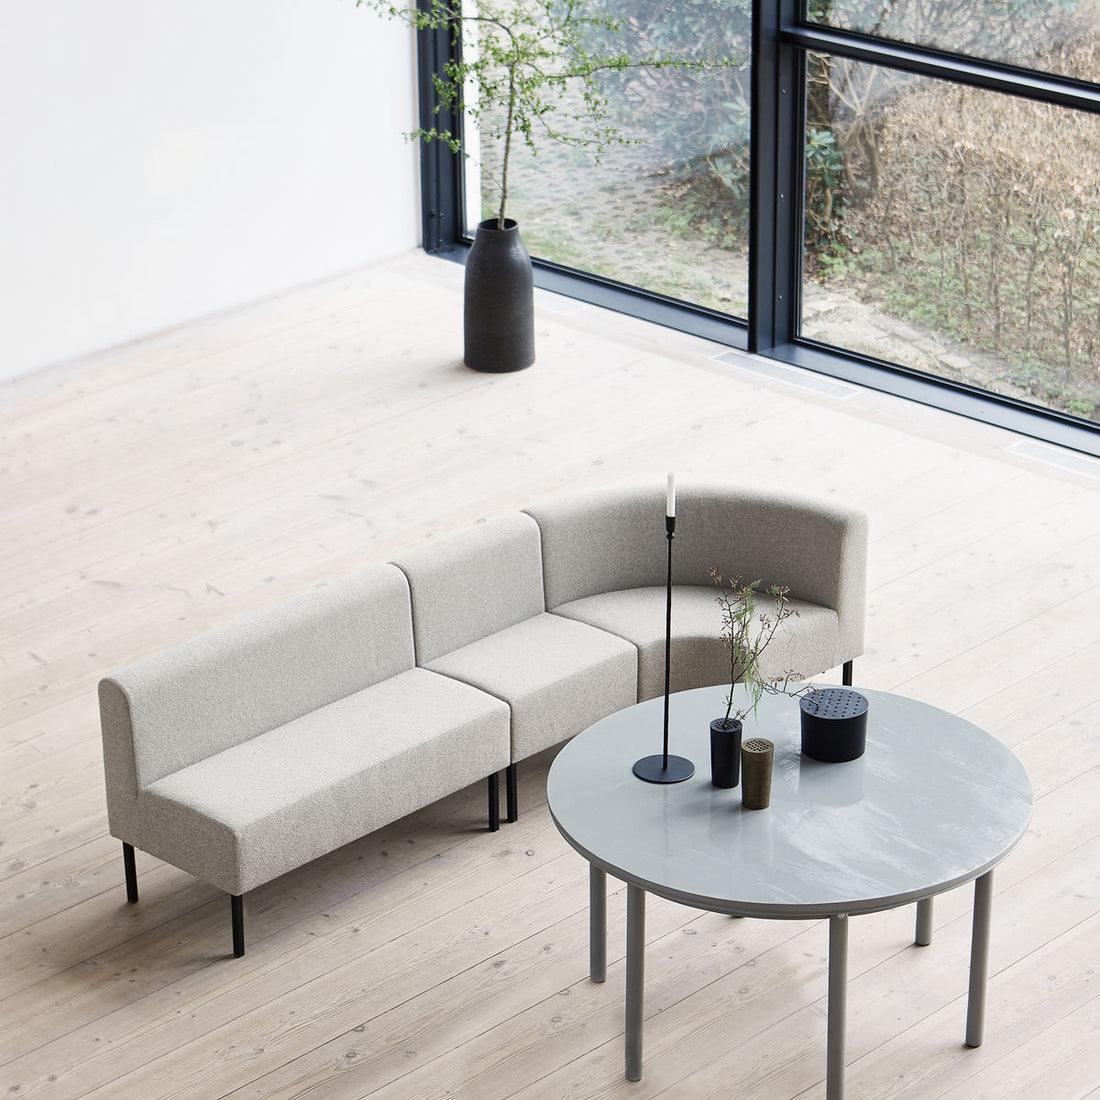 Huslege - Sofa, Corner Seater, Natural - L: 85 cm, W: 60 cm, H: 80 cm